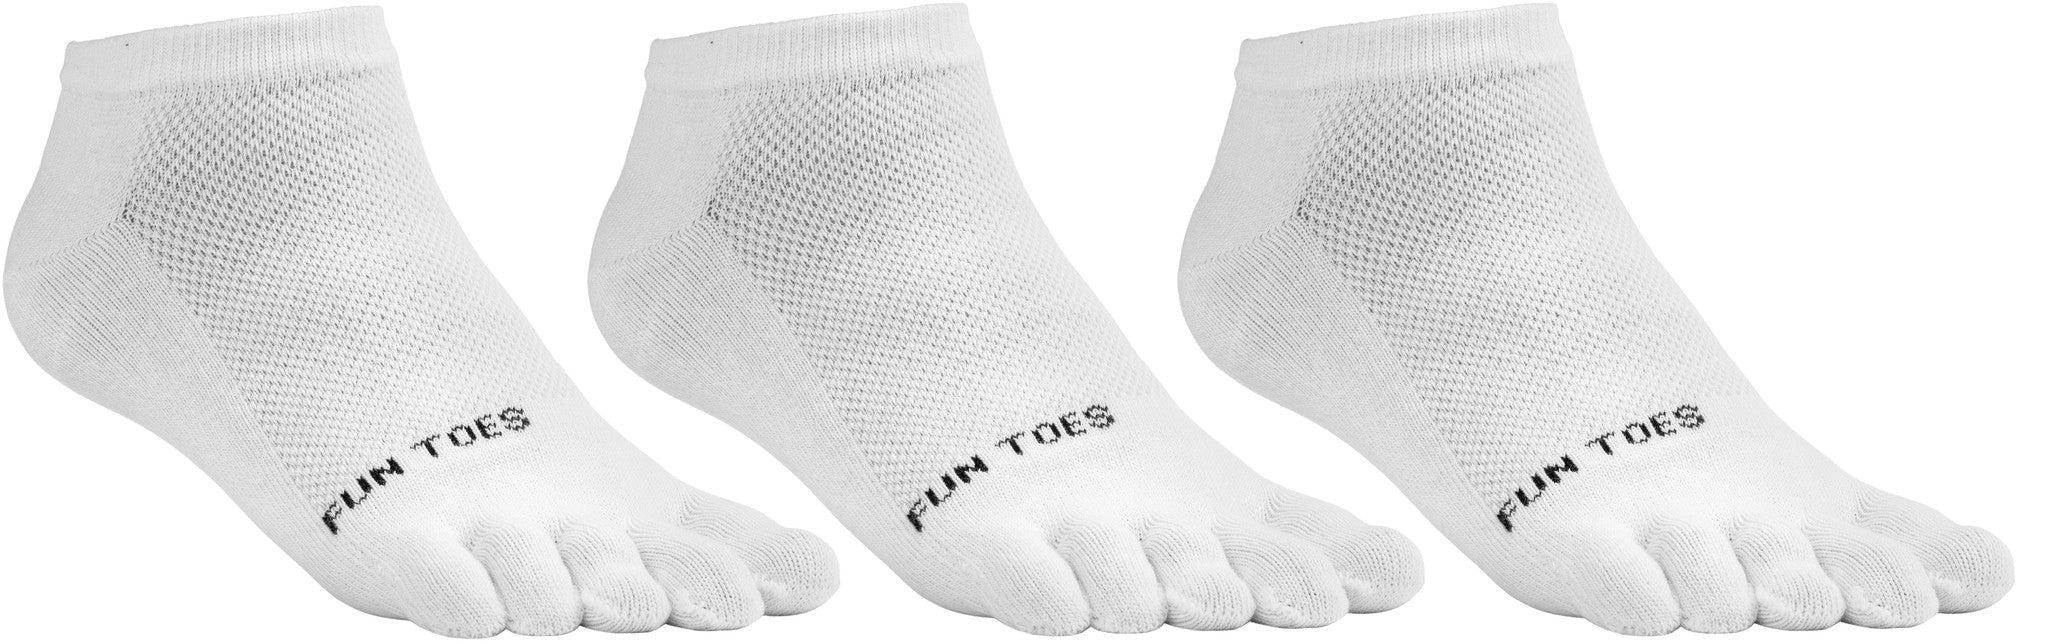 FUN TOES Women's Toe Socks Barefoot Running Socks Size 9-11 Shoe